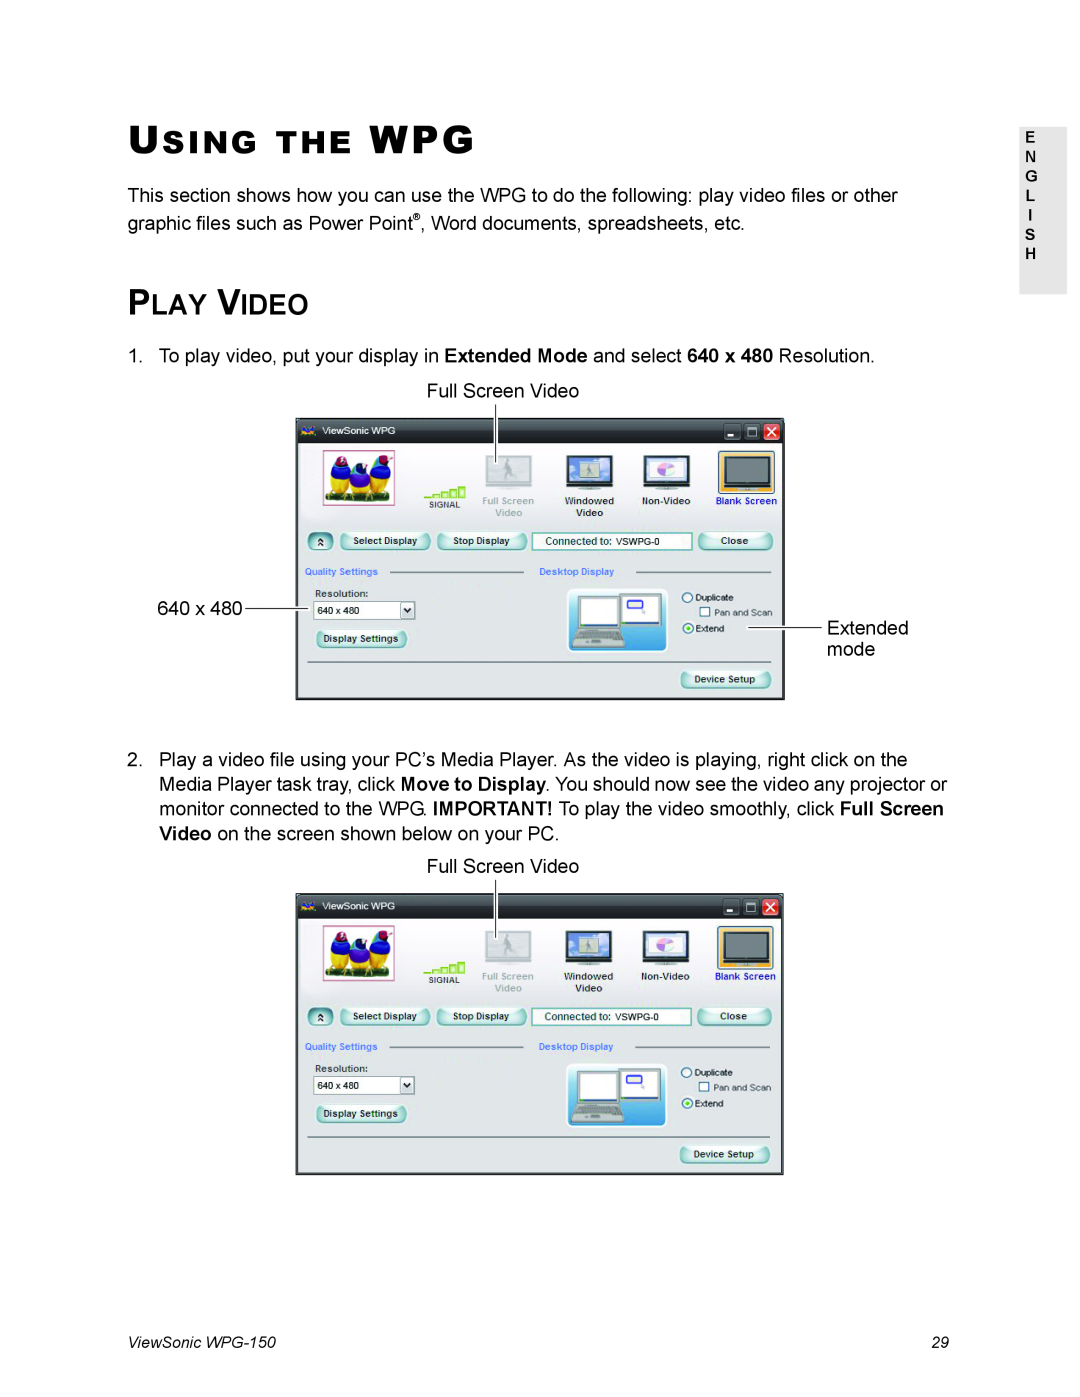 ViewSonic WPG-150 manual Using The Wpg, Play Video 